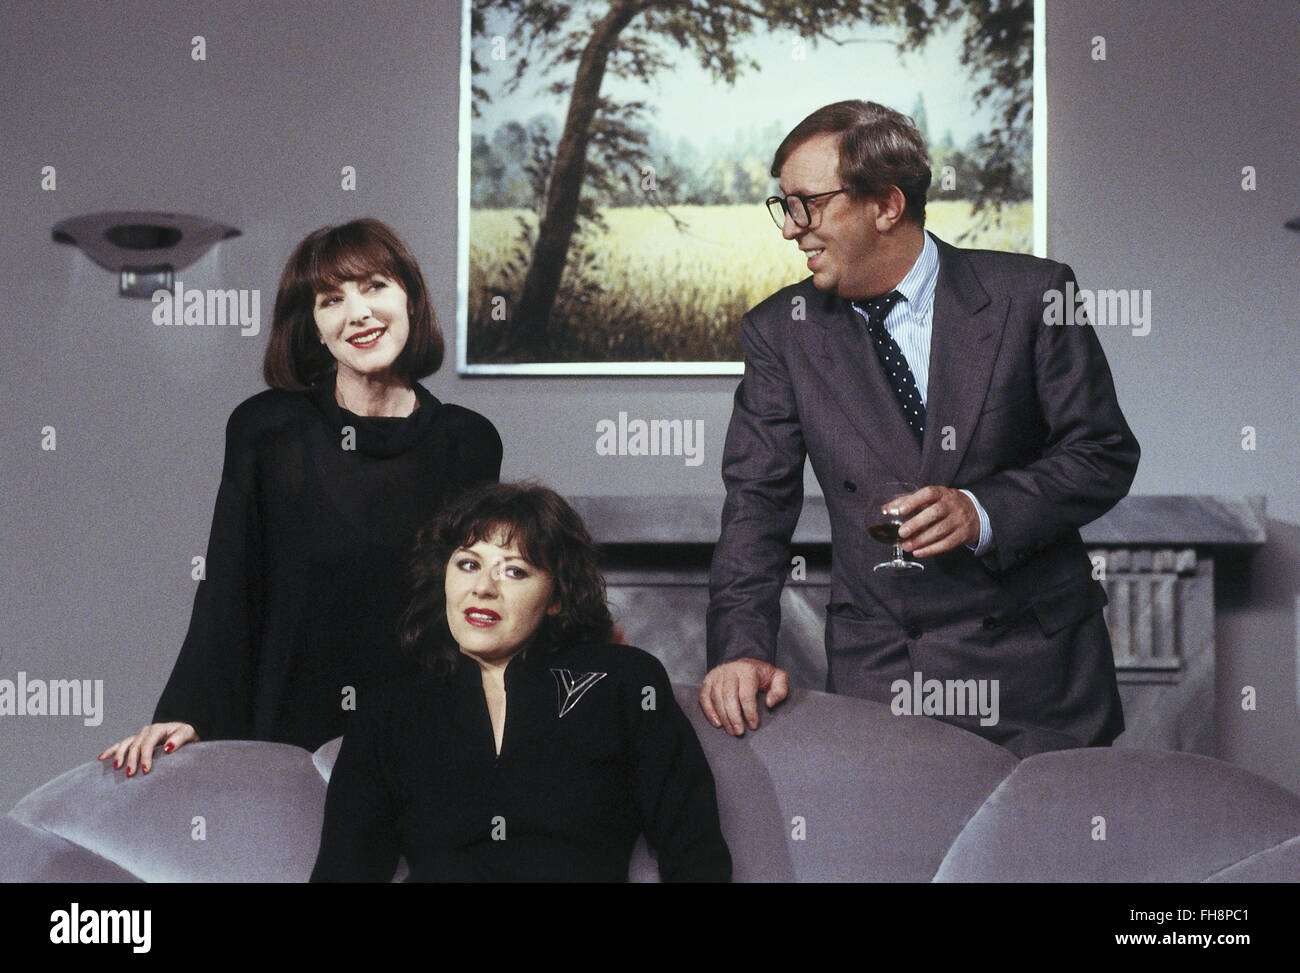 telecast, 'Old Times' (Alte Zeiten), DEU 1988, scene with: Gundi Ellert, Heidelinde Weis, Vadim Glowna, Third-Party-Permissions-Neccessary Stock Photo